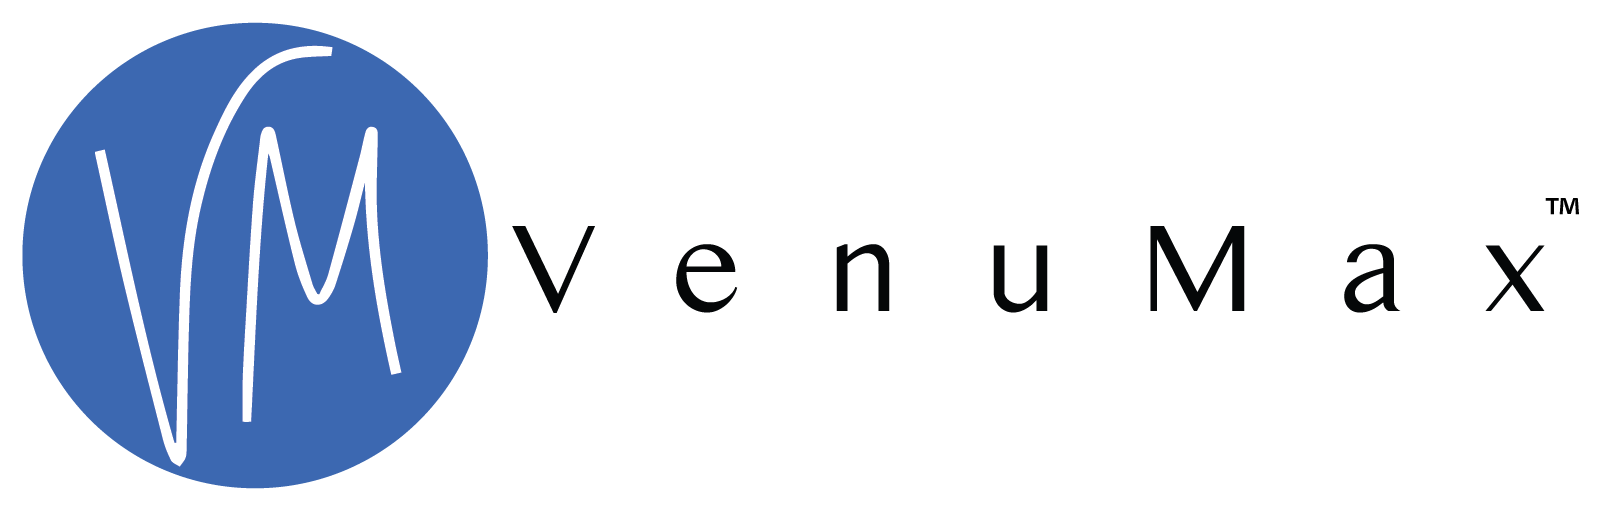 VenuMax - Venue Management Solution - mbsPartners